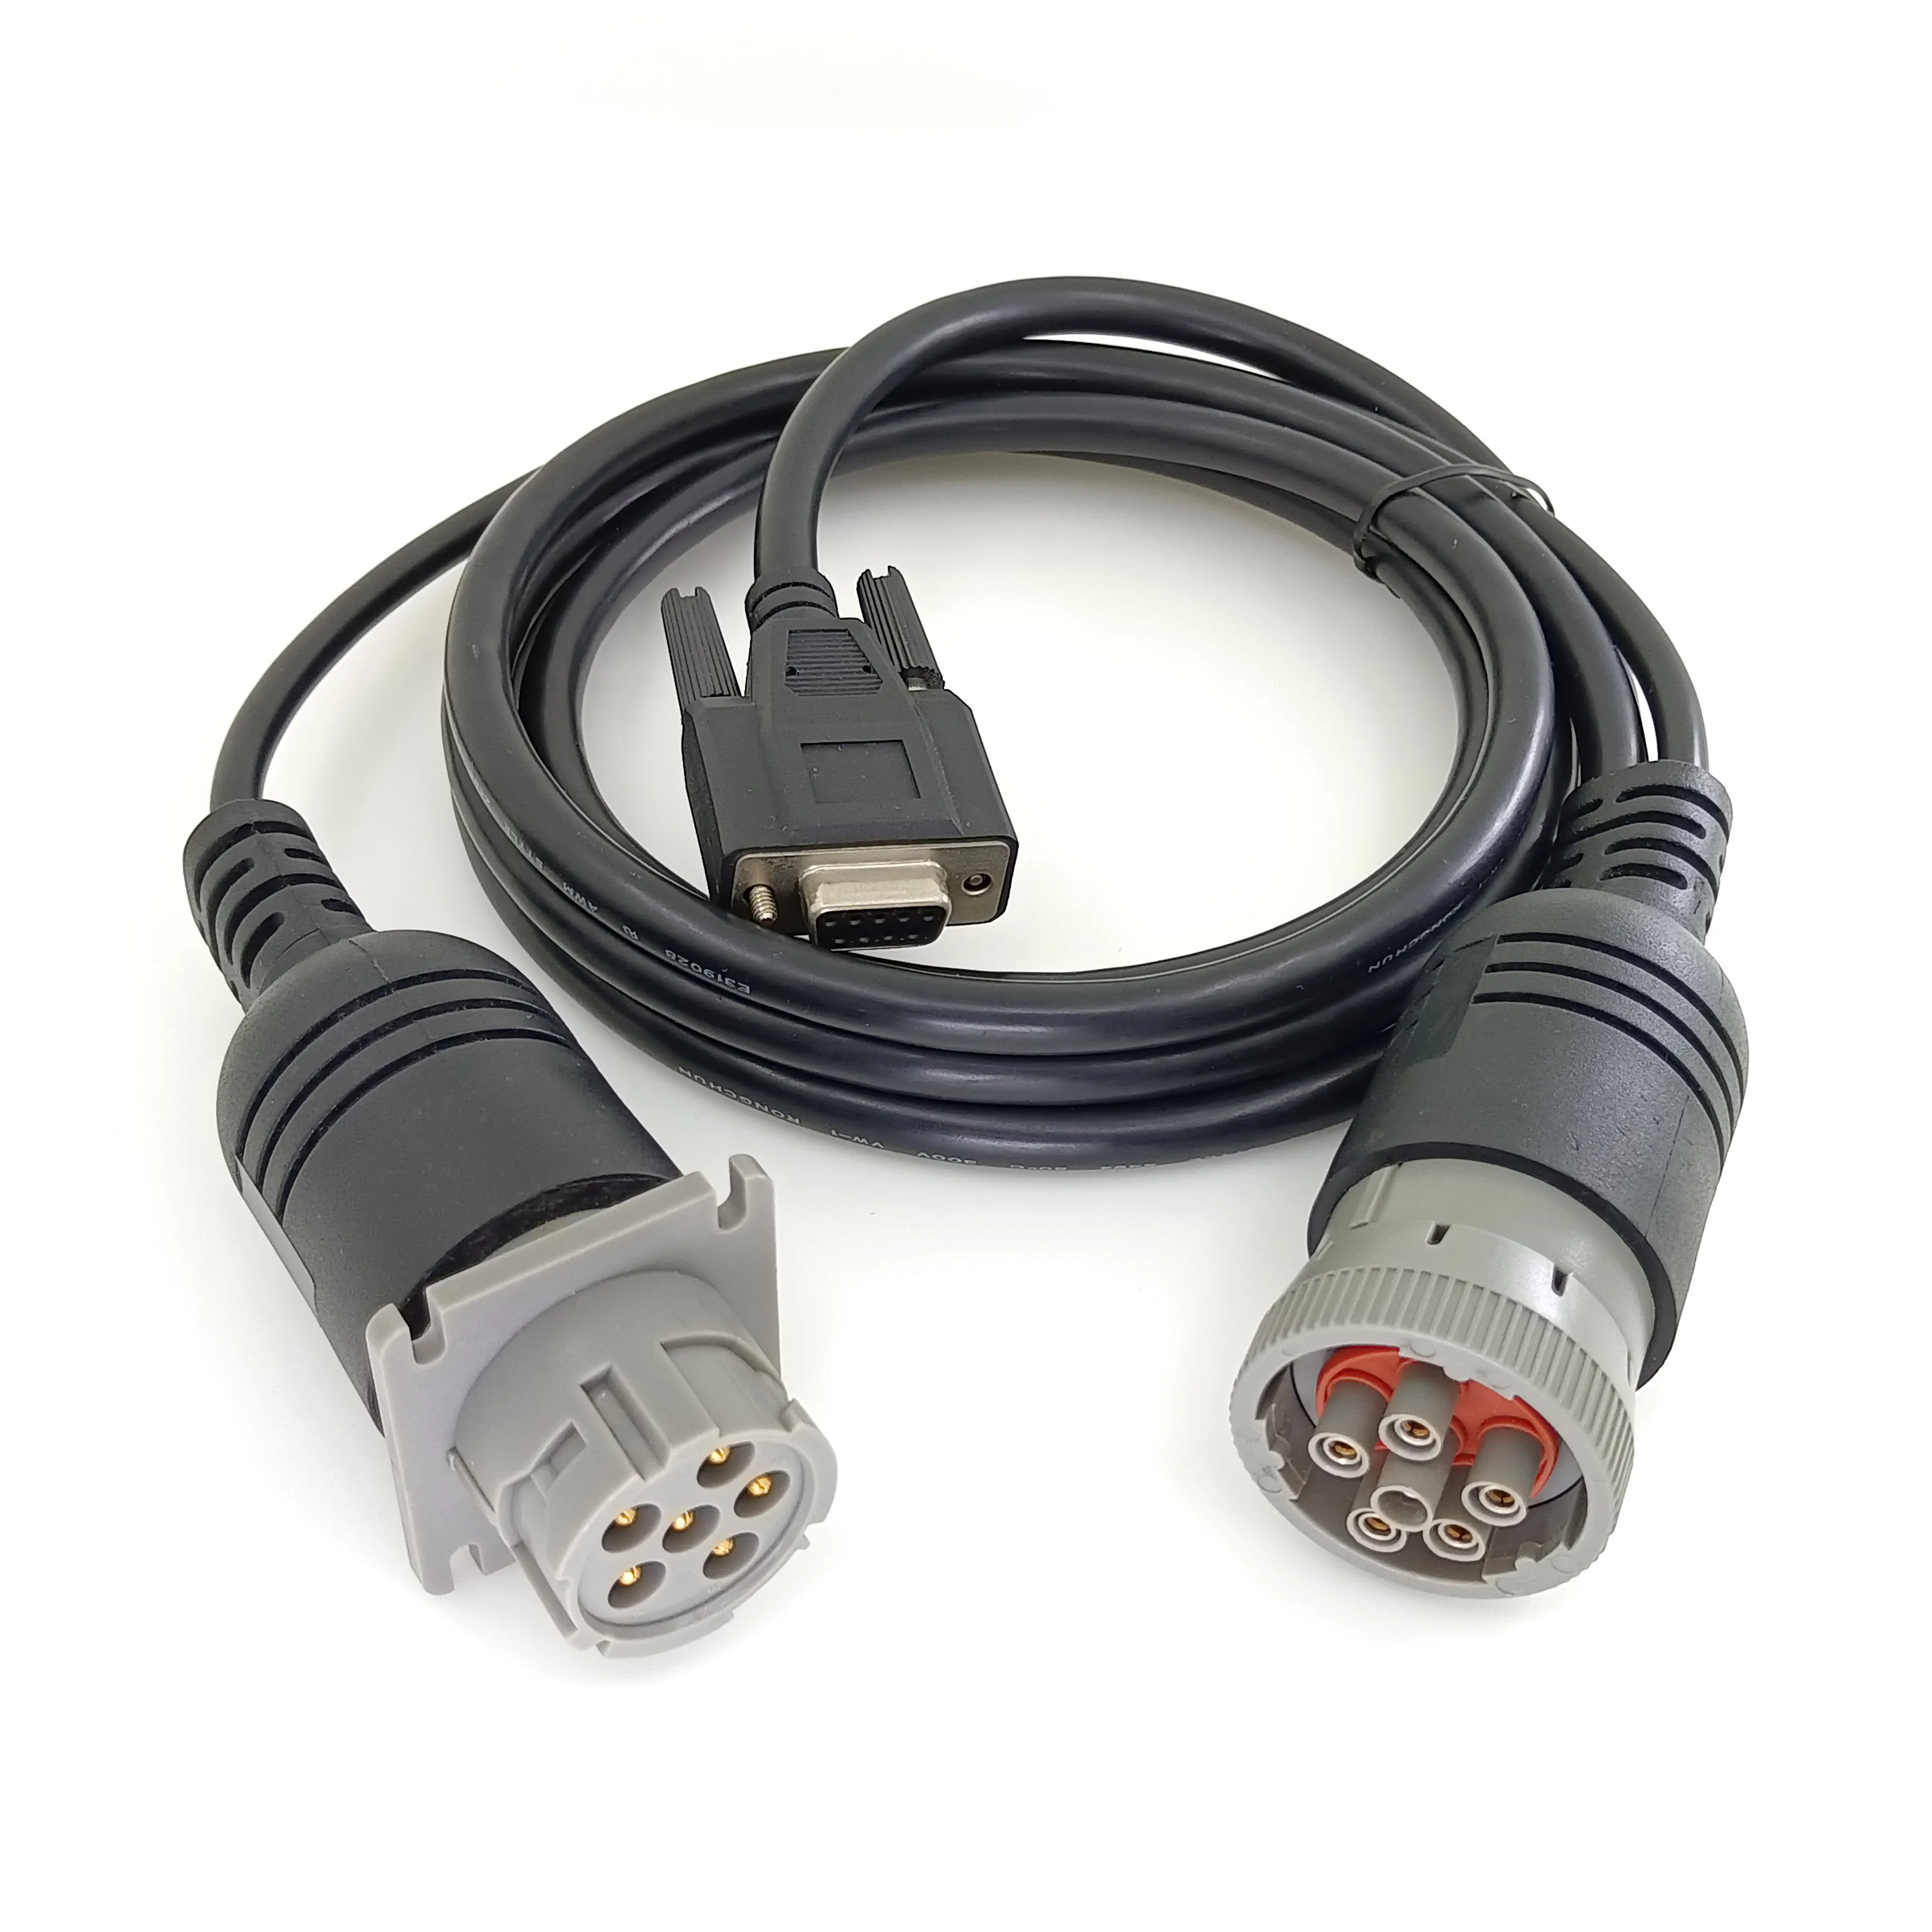 Arnés de cables personalizado Deutsch J1939 J1708 cable a M12/DB9/db15/OBDII Cable de diagnóstico automotriz arnés de cableado completo para automóviles